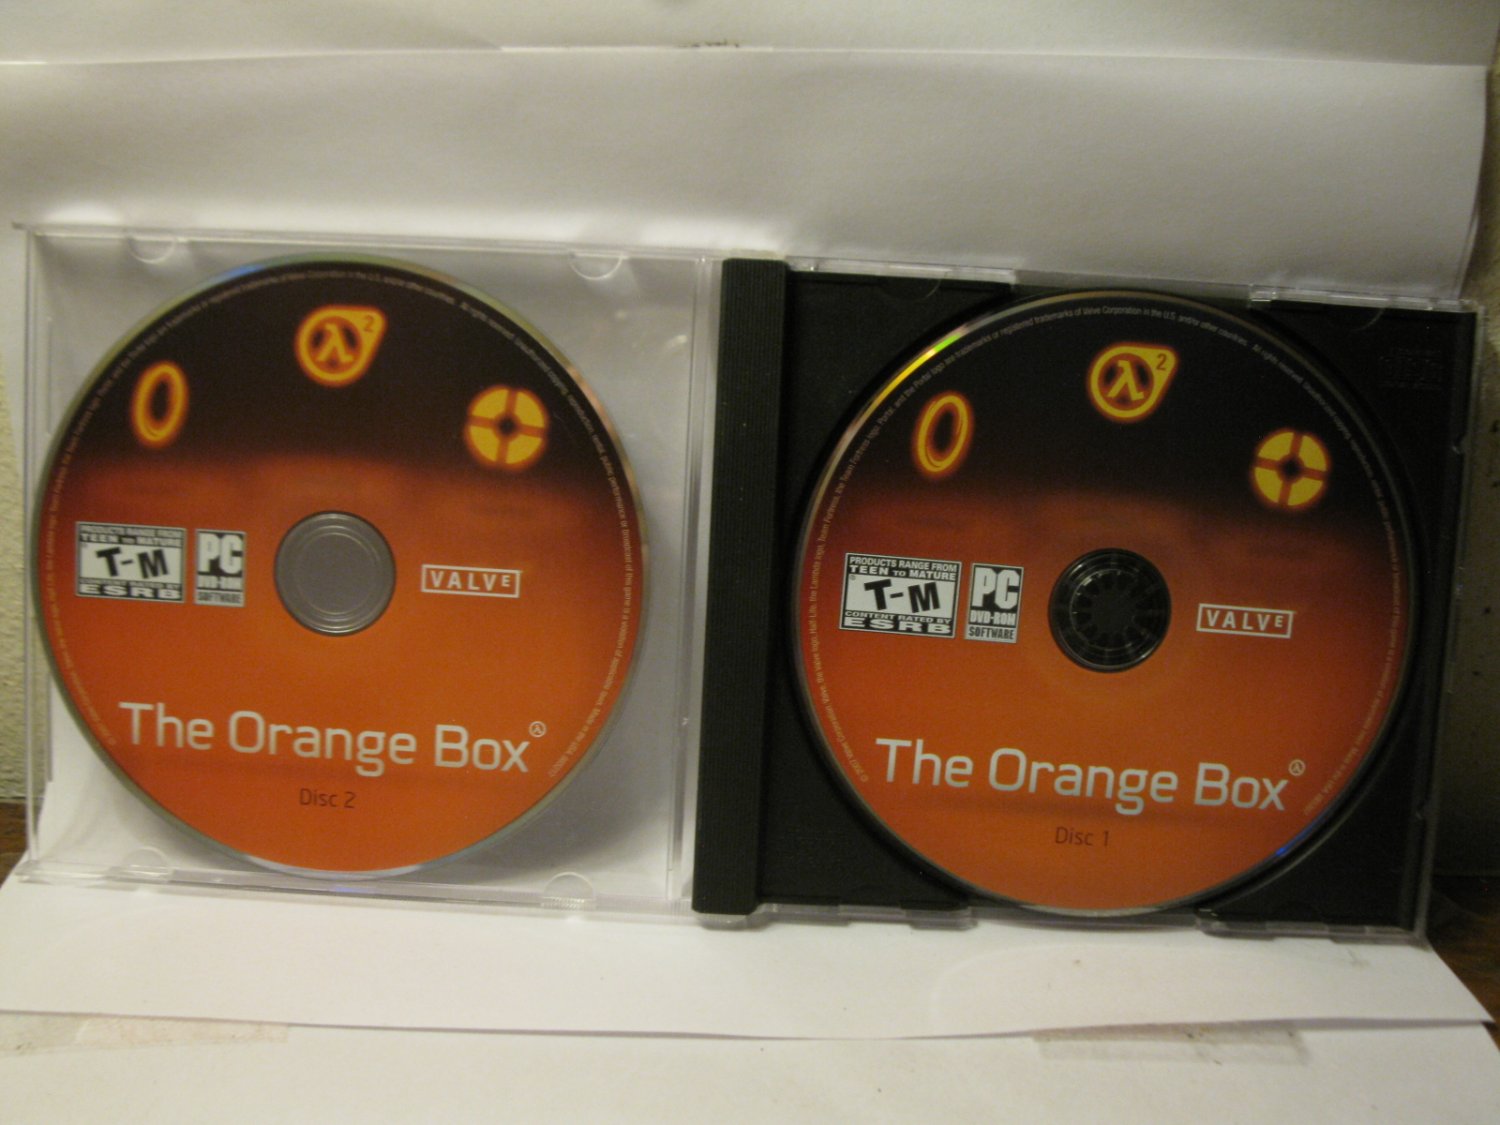 2007 PC Video Game: The Orange Box, 2 disc set